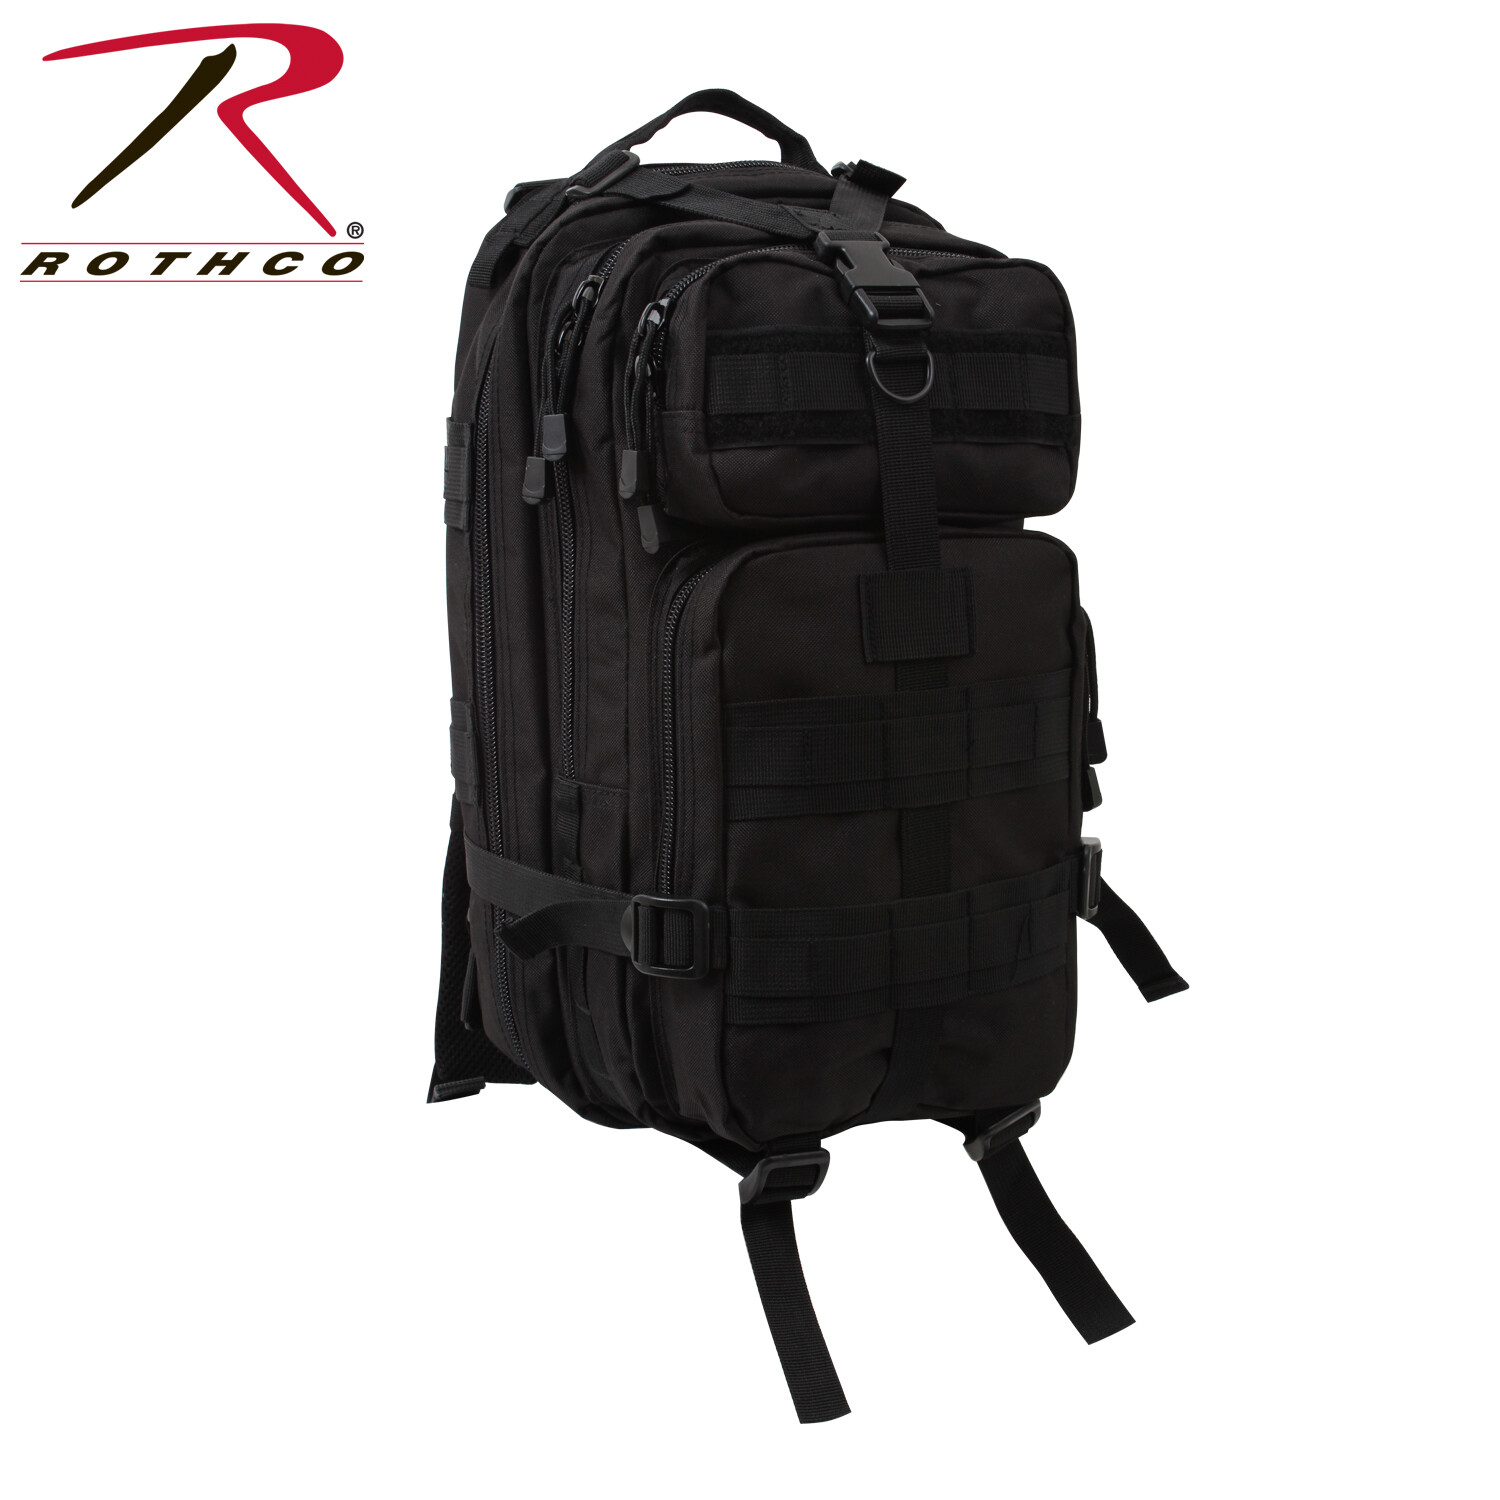 Rothco, 2287, Medium Transport Pack, Black